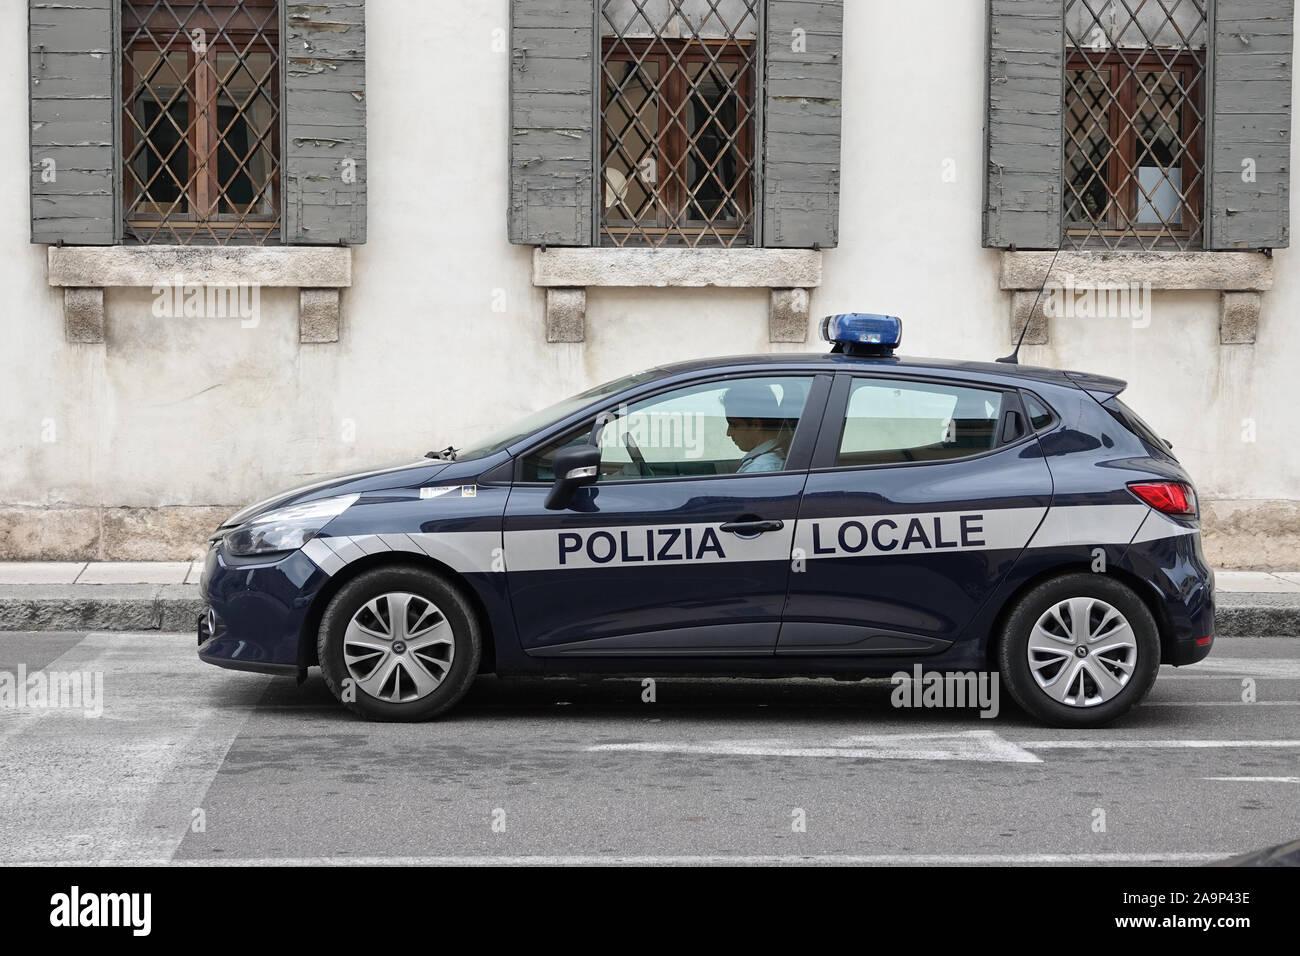 Local police car (Polizia locale) in Verona, Italy,  August 2019 Stock Photo